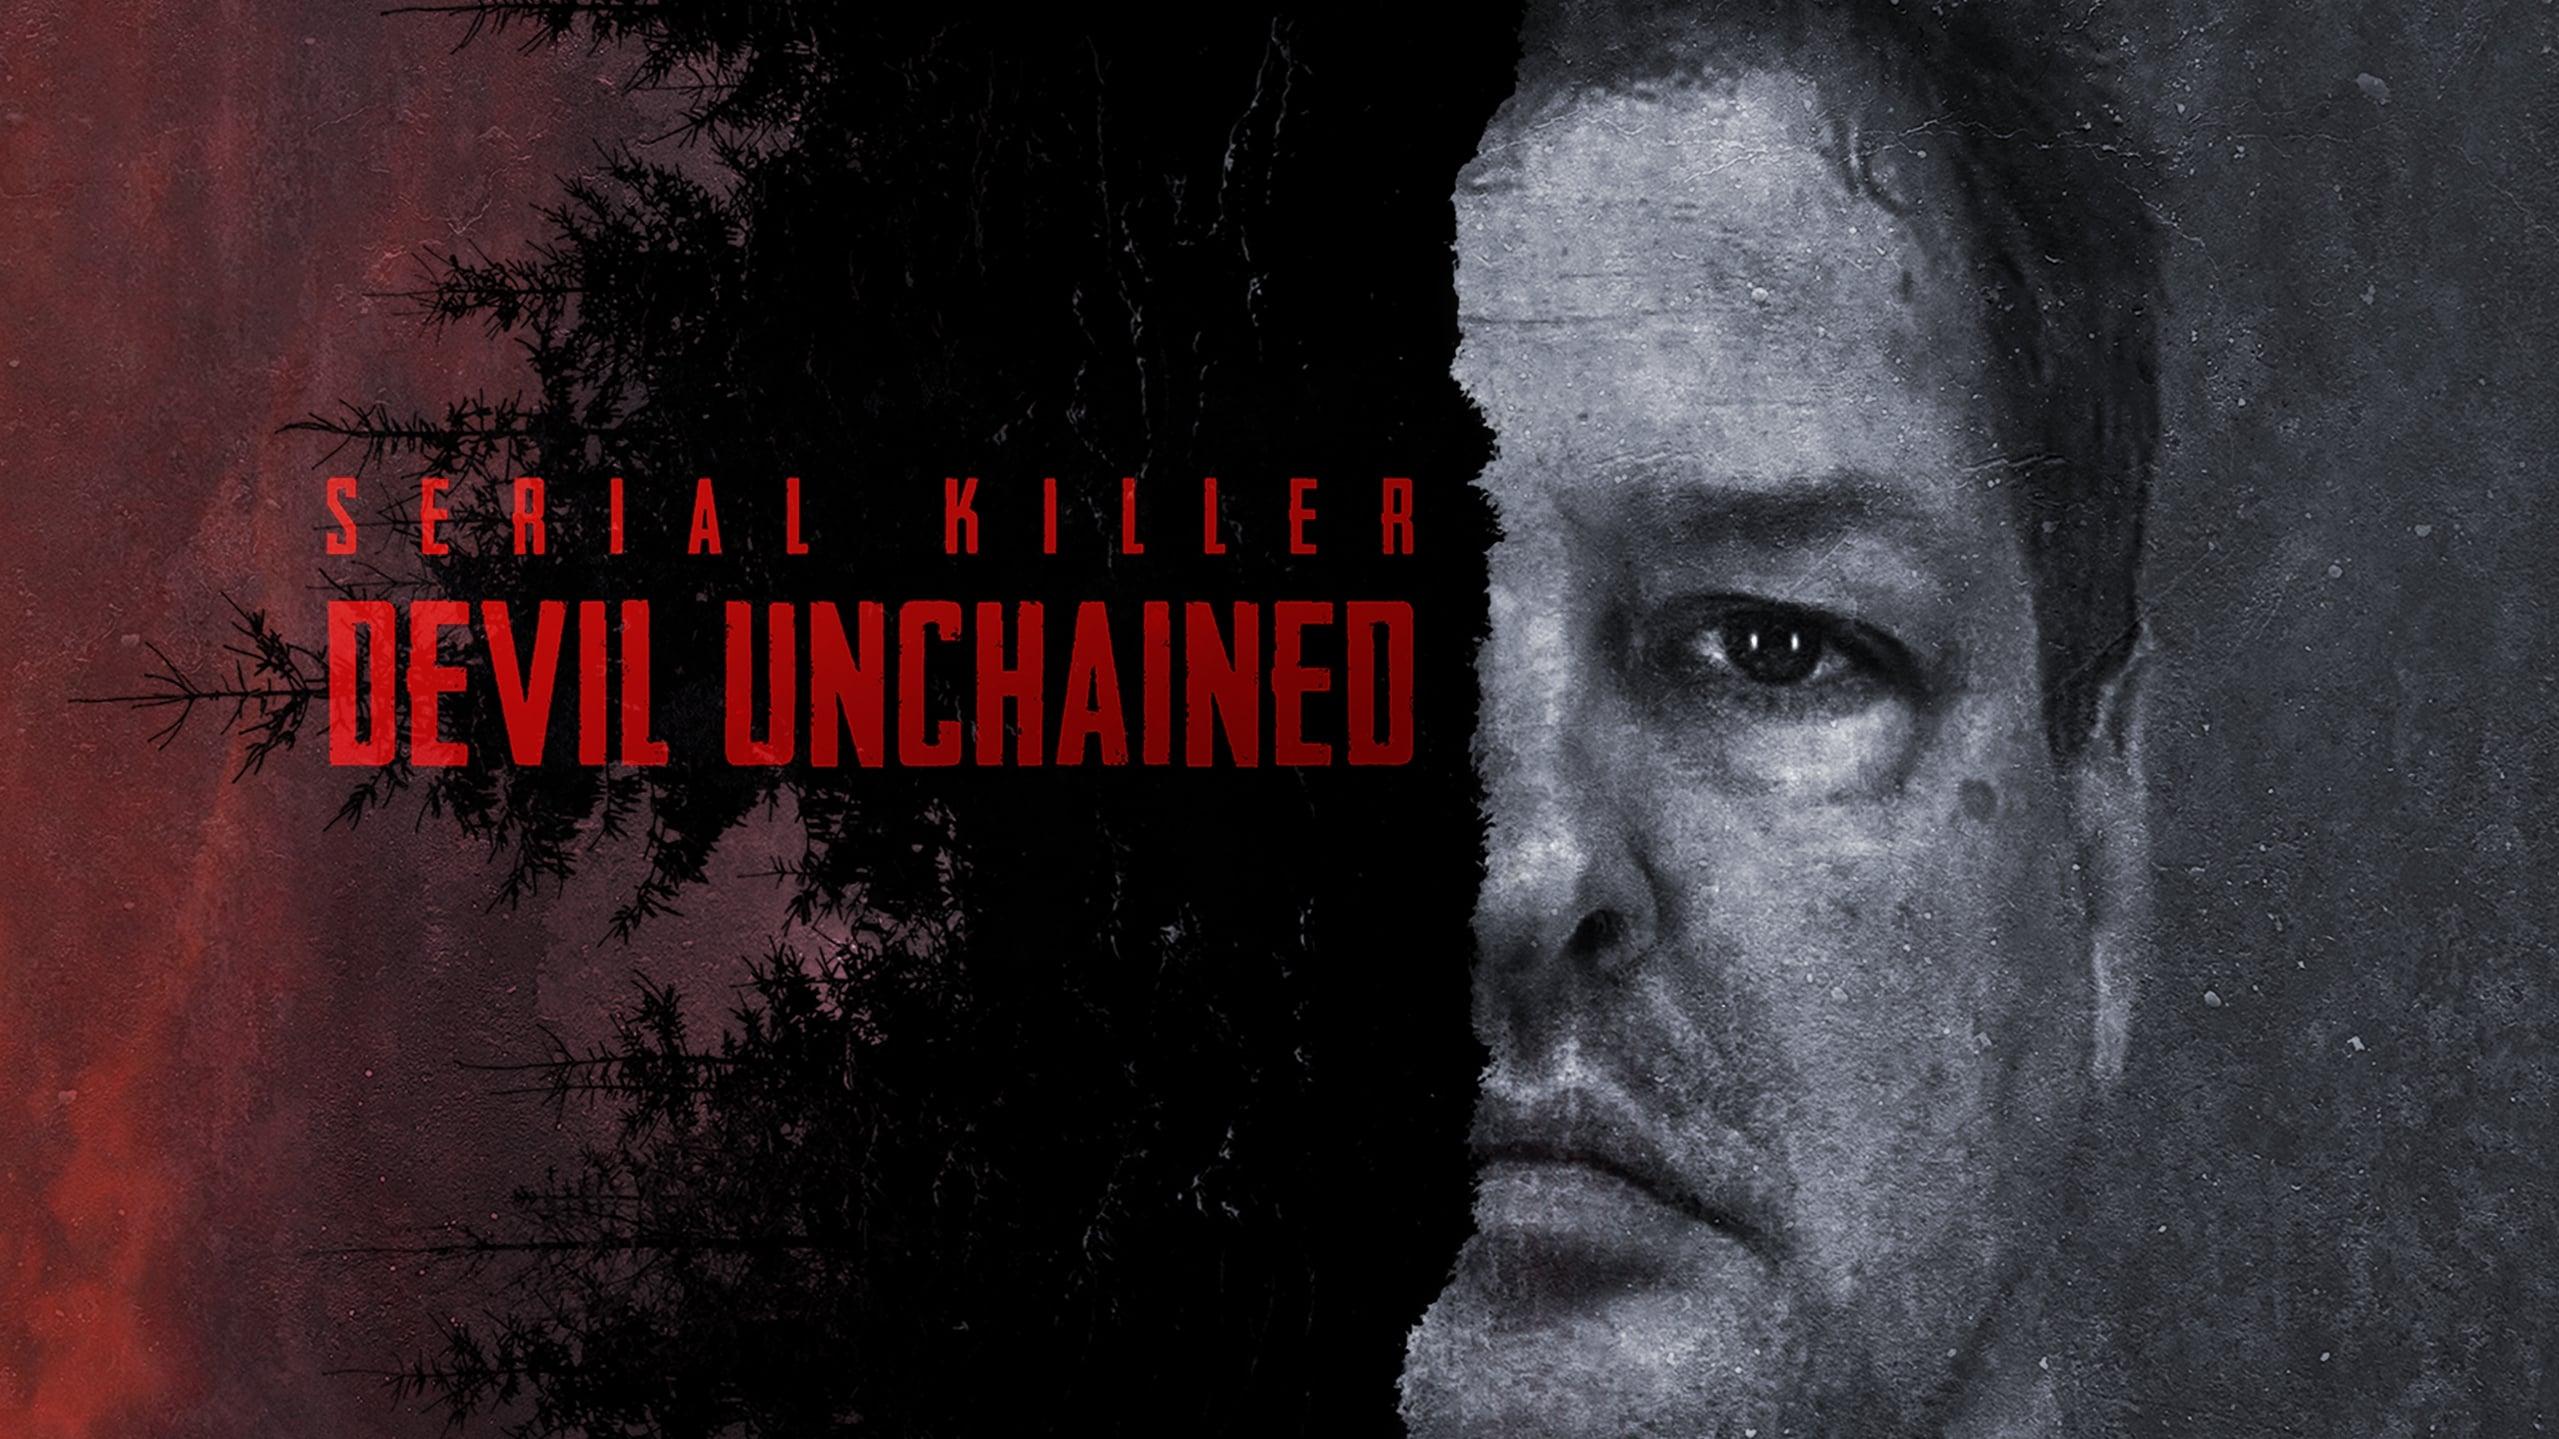 Serial Killer: Devil Unchained backdrop